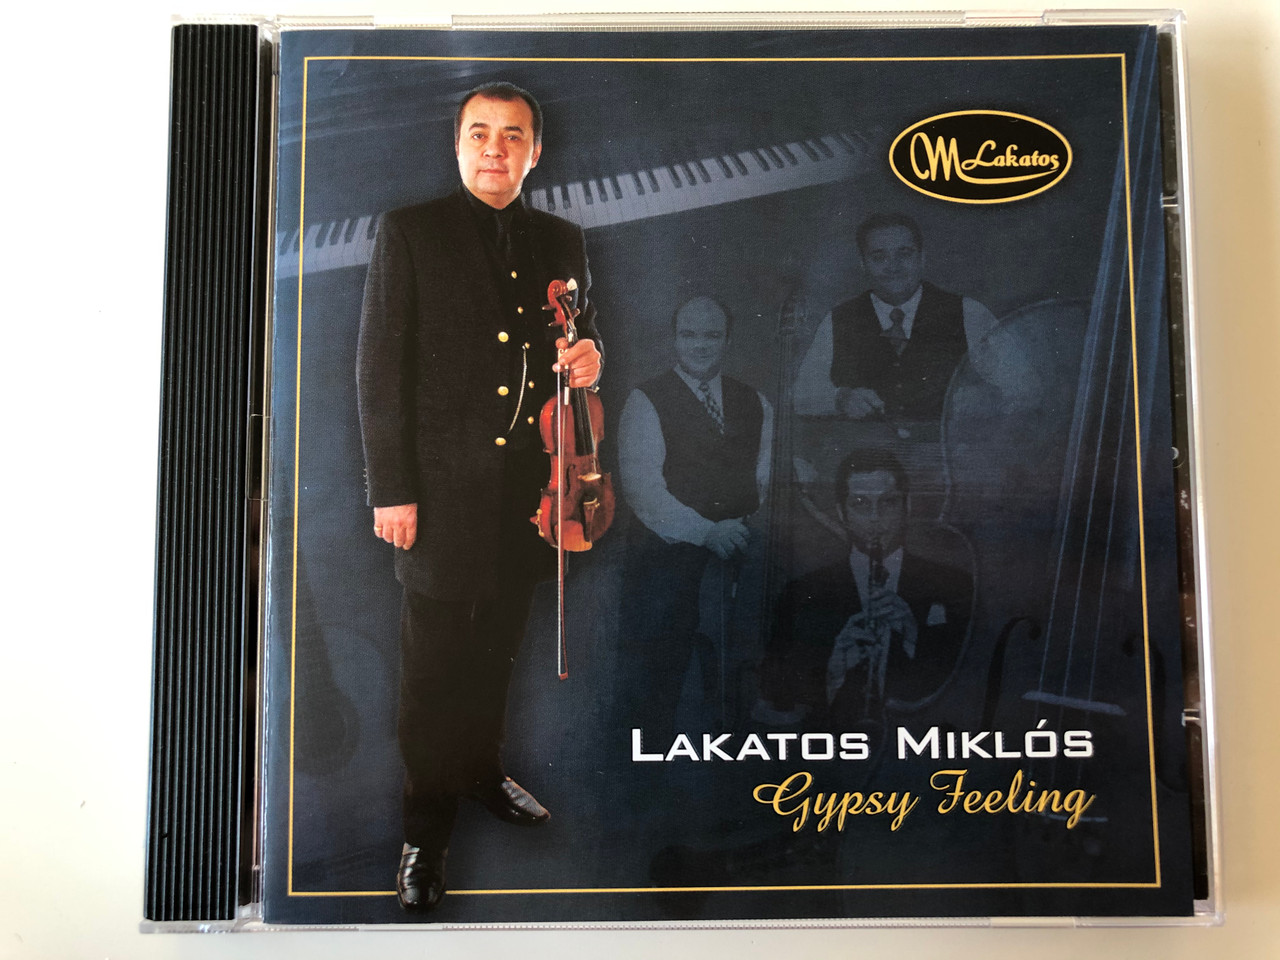 Lakatos Miklos - Gypsy Feeling / MusiCDome Kft. Audio CD 2005 /  5998175162430 - bibleinmylanguage